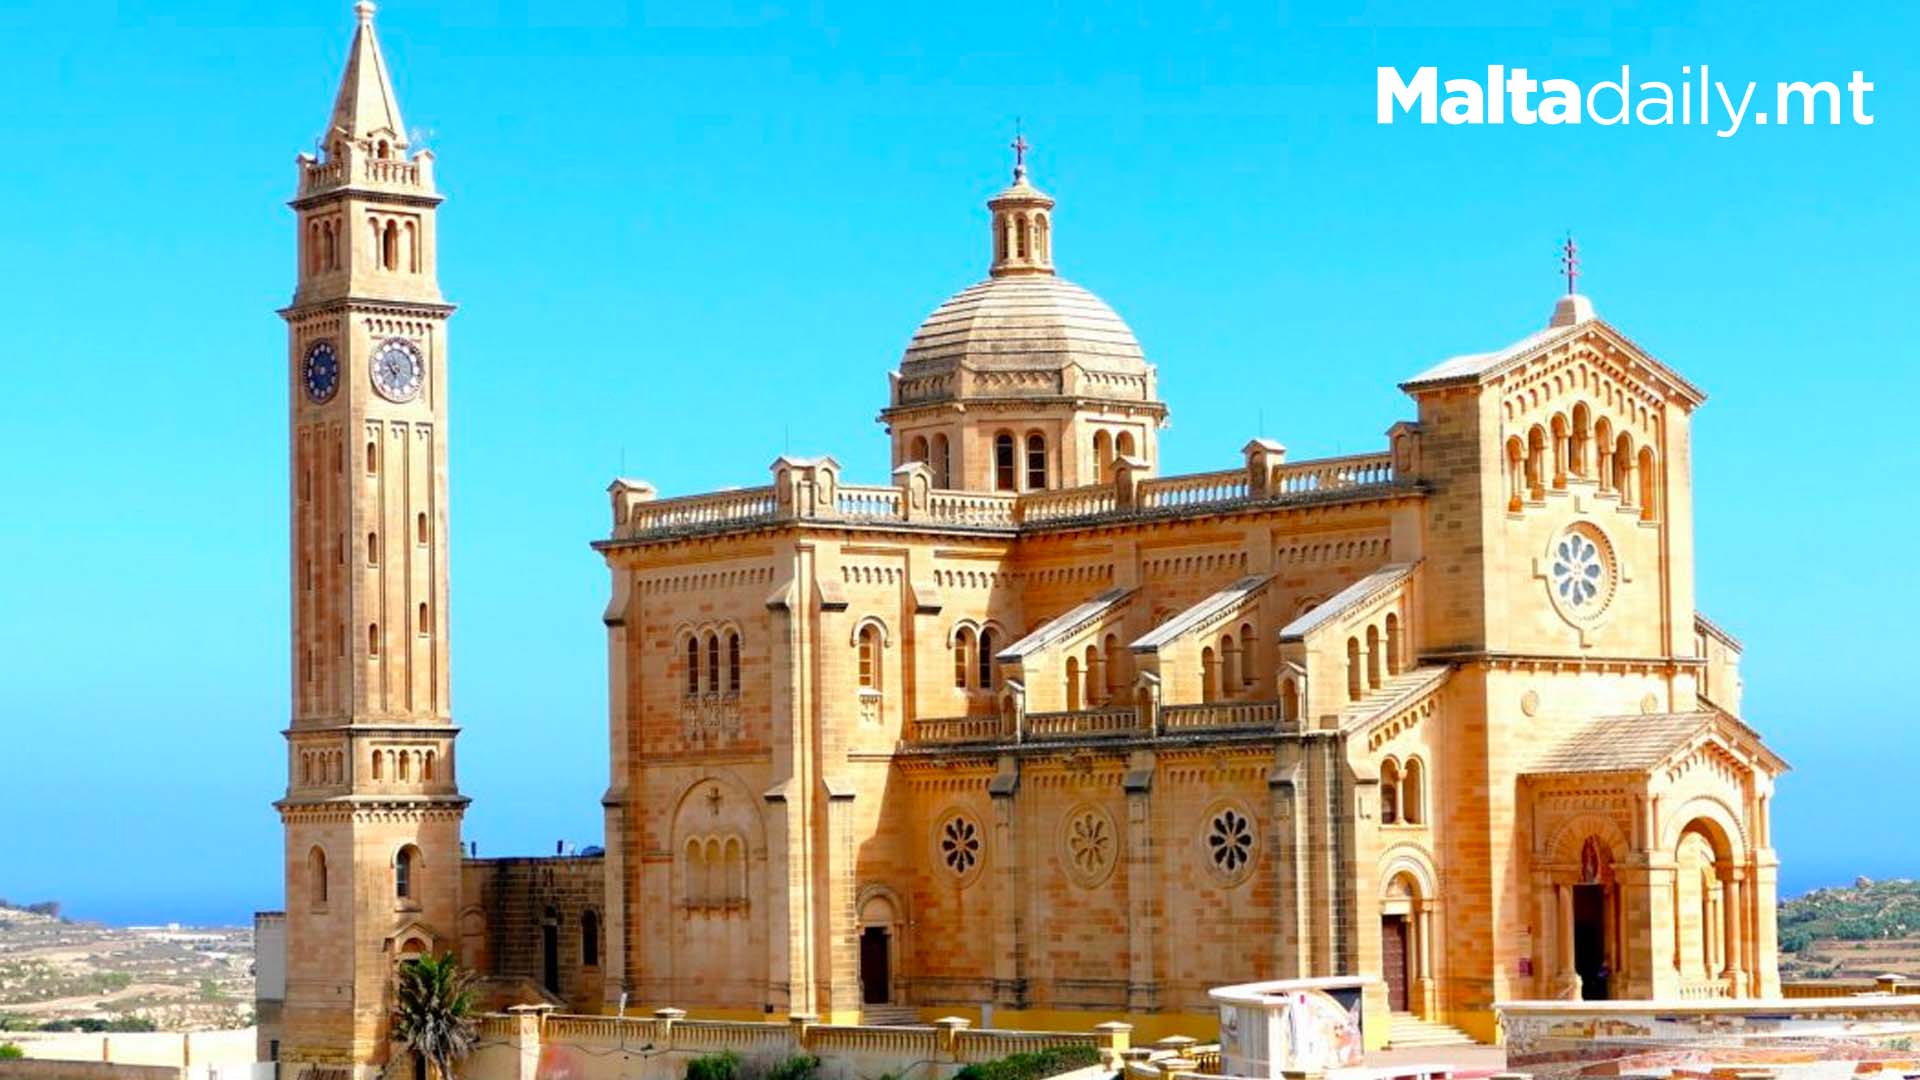 5.1% Of Malta's Population With No Religious Affiliation